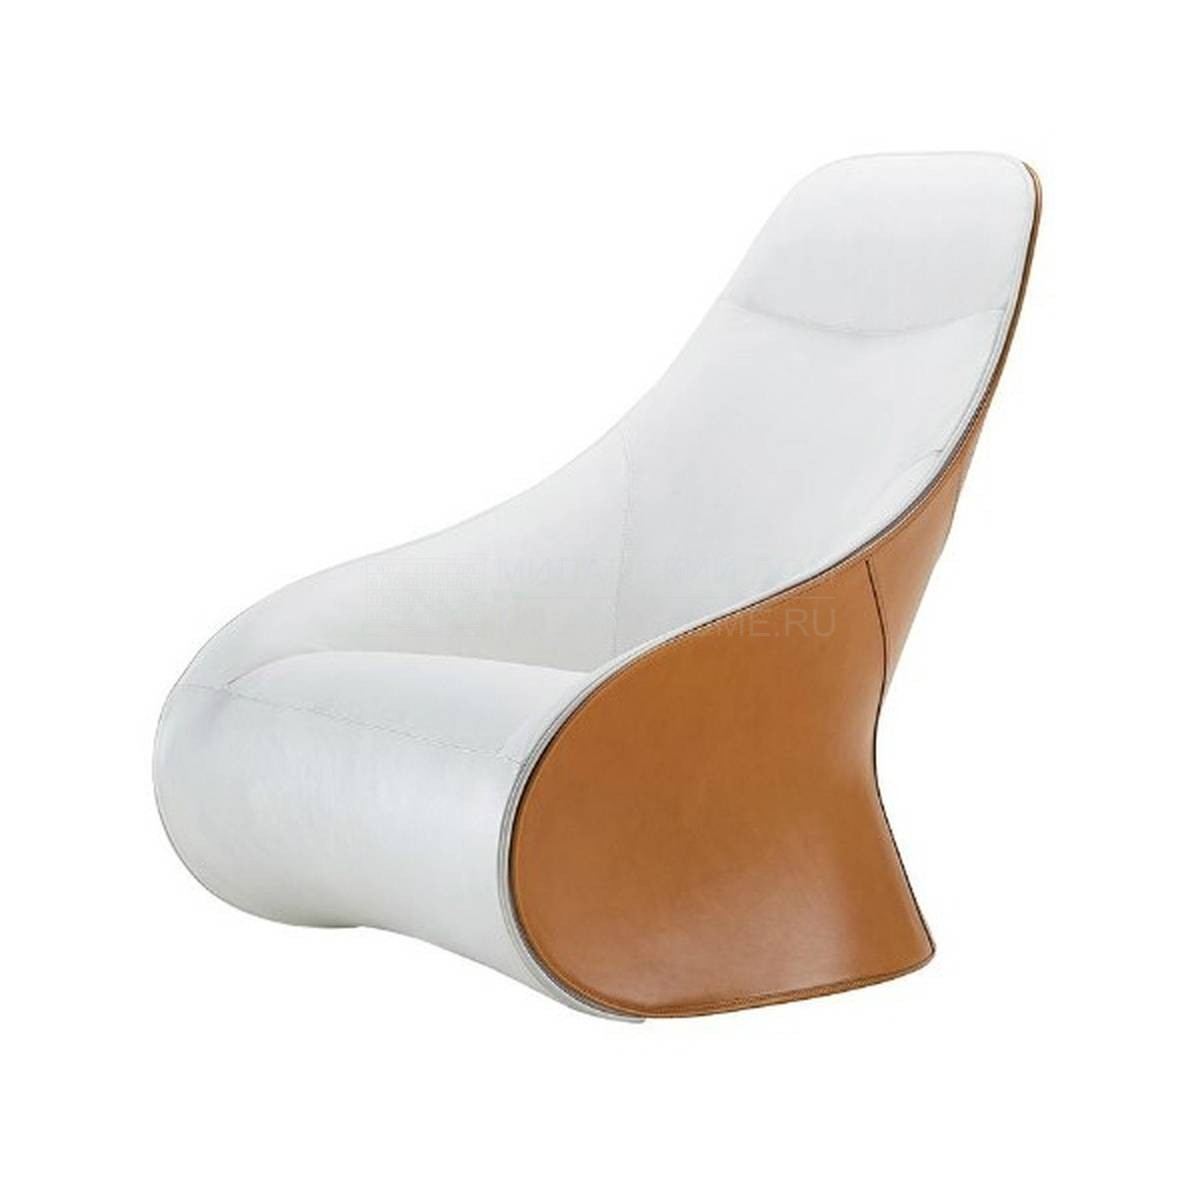 Кожаное кресло Derby armchair leather из Италии фабрики ZANOTTA